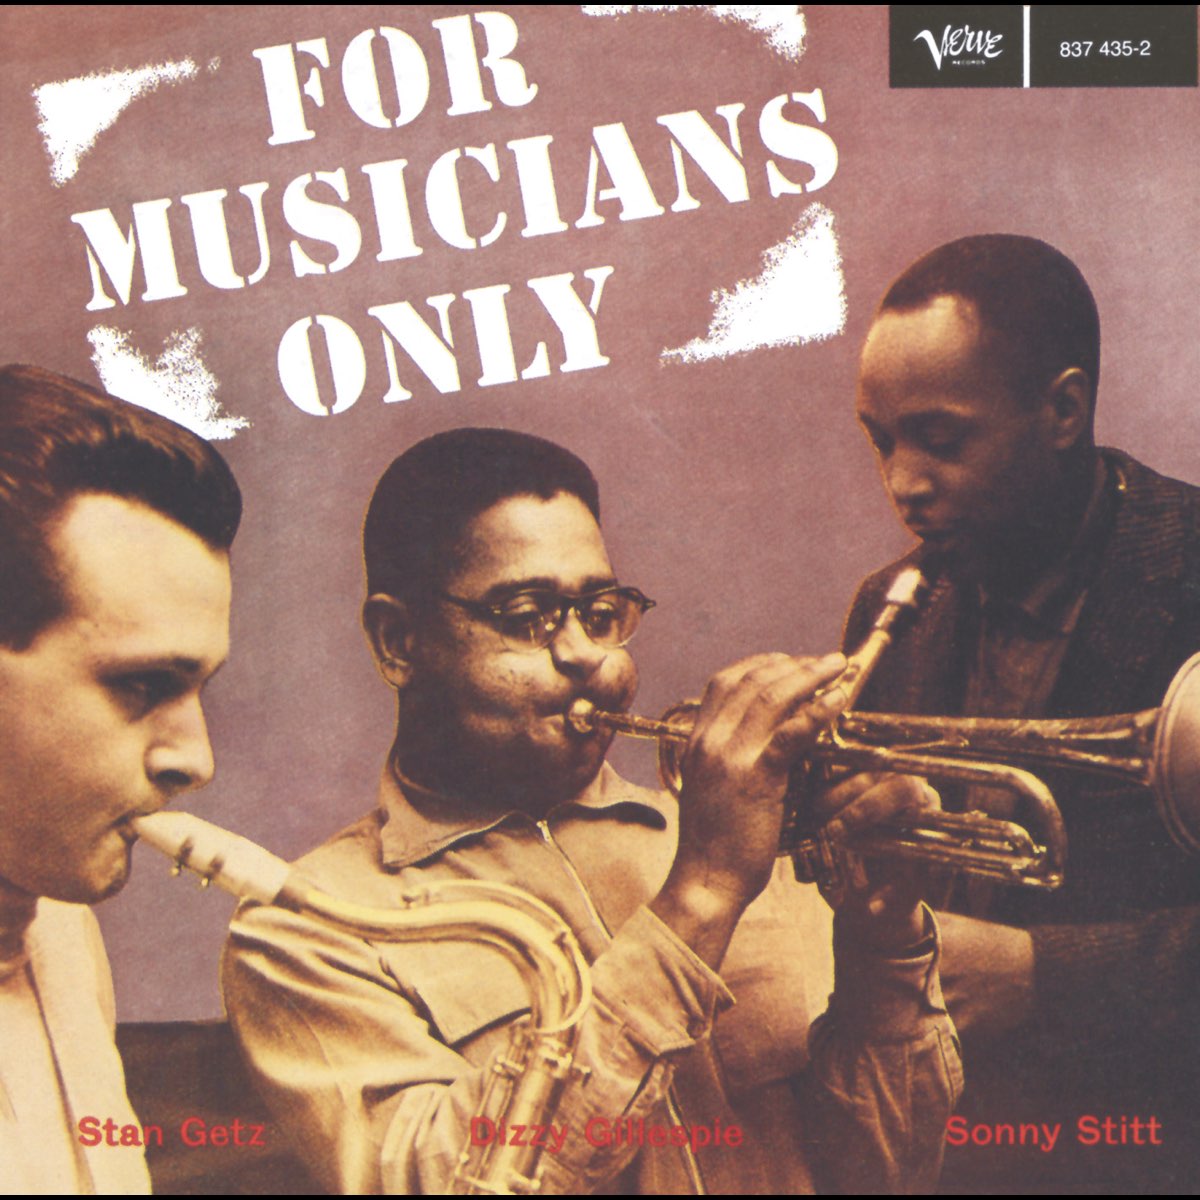 ‎For Musicians Only by Dizzy Gillespie, Sonny Stitt & Stan Getz on ...